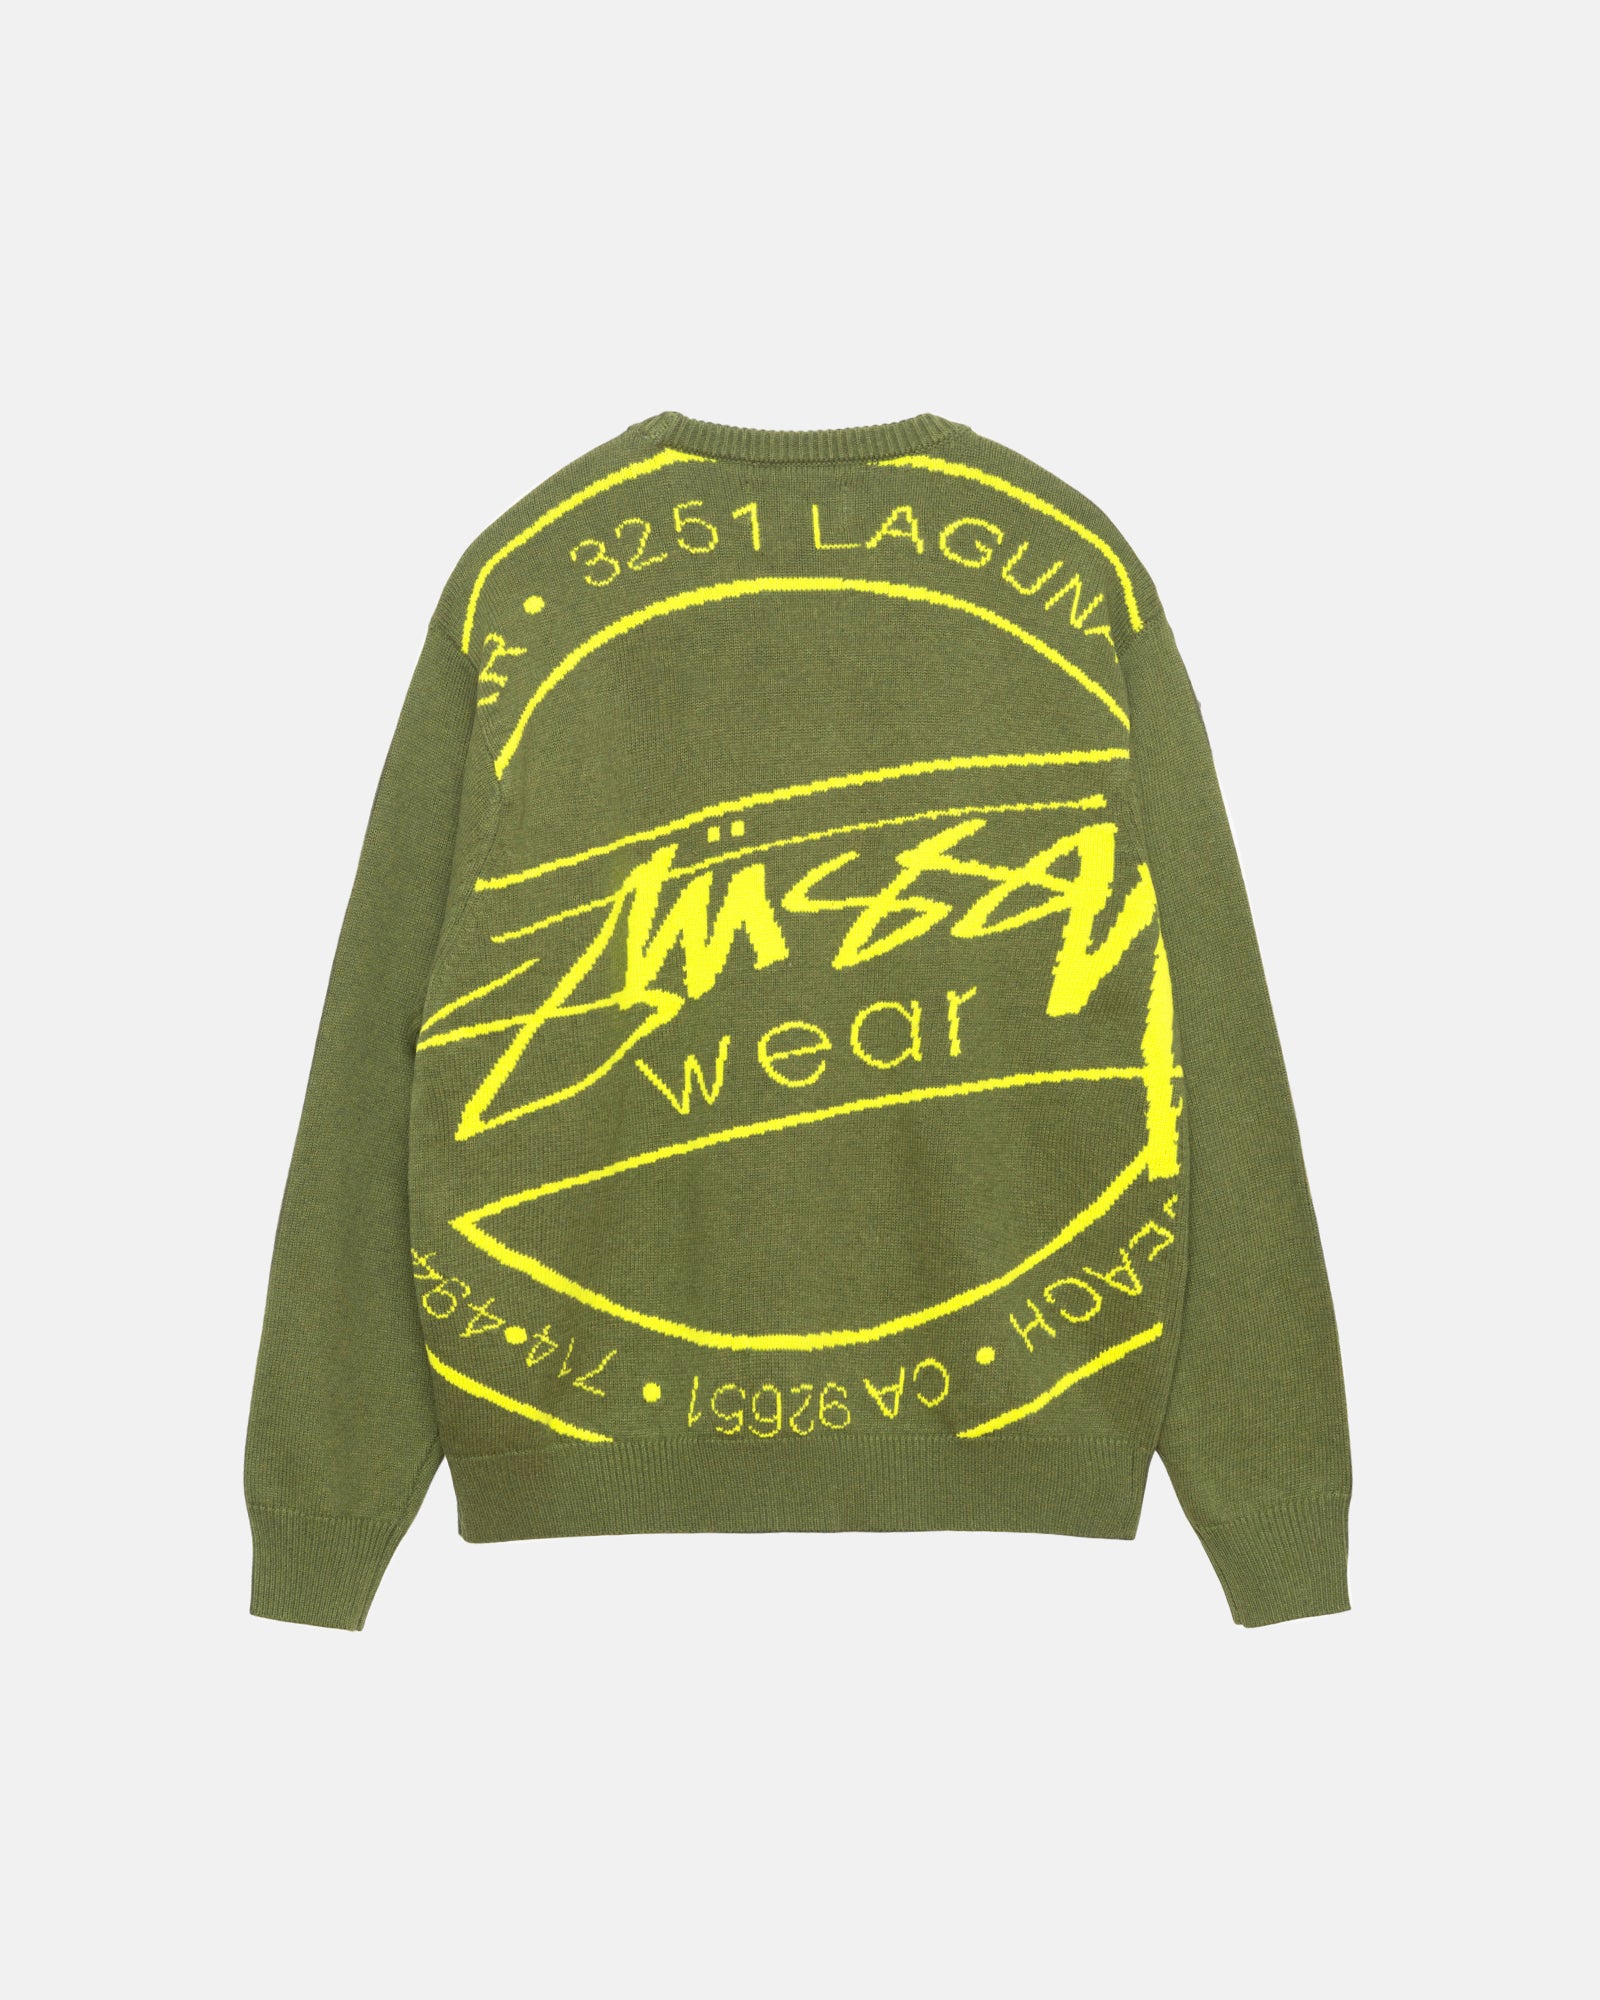 Laguna Icon Sweater in dark green – Stüssy Japan